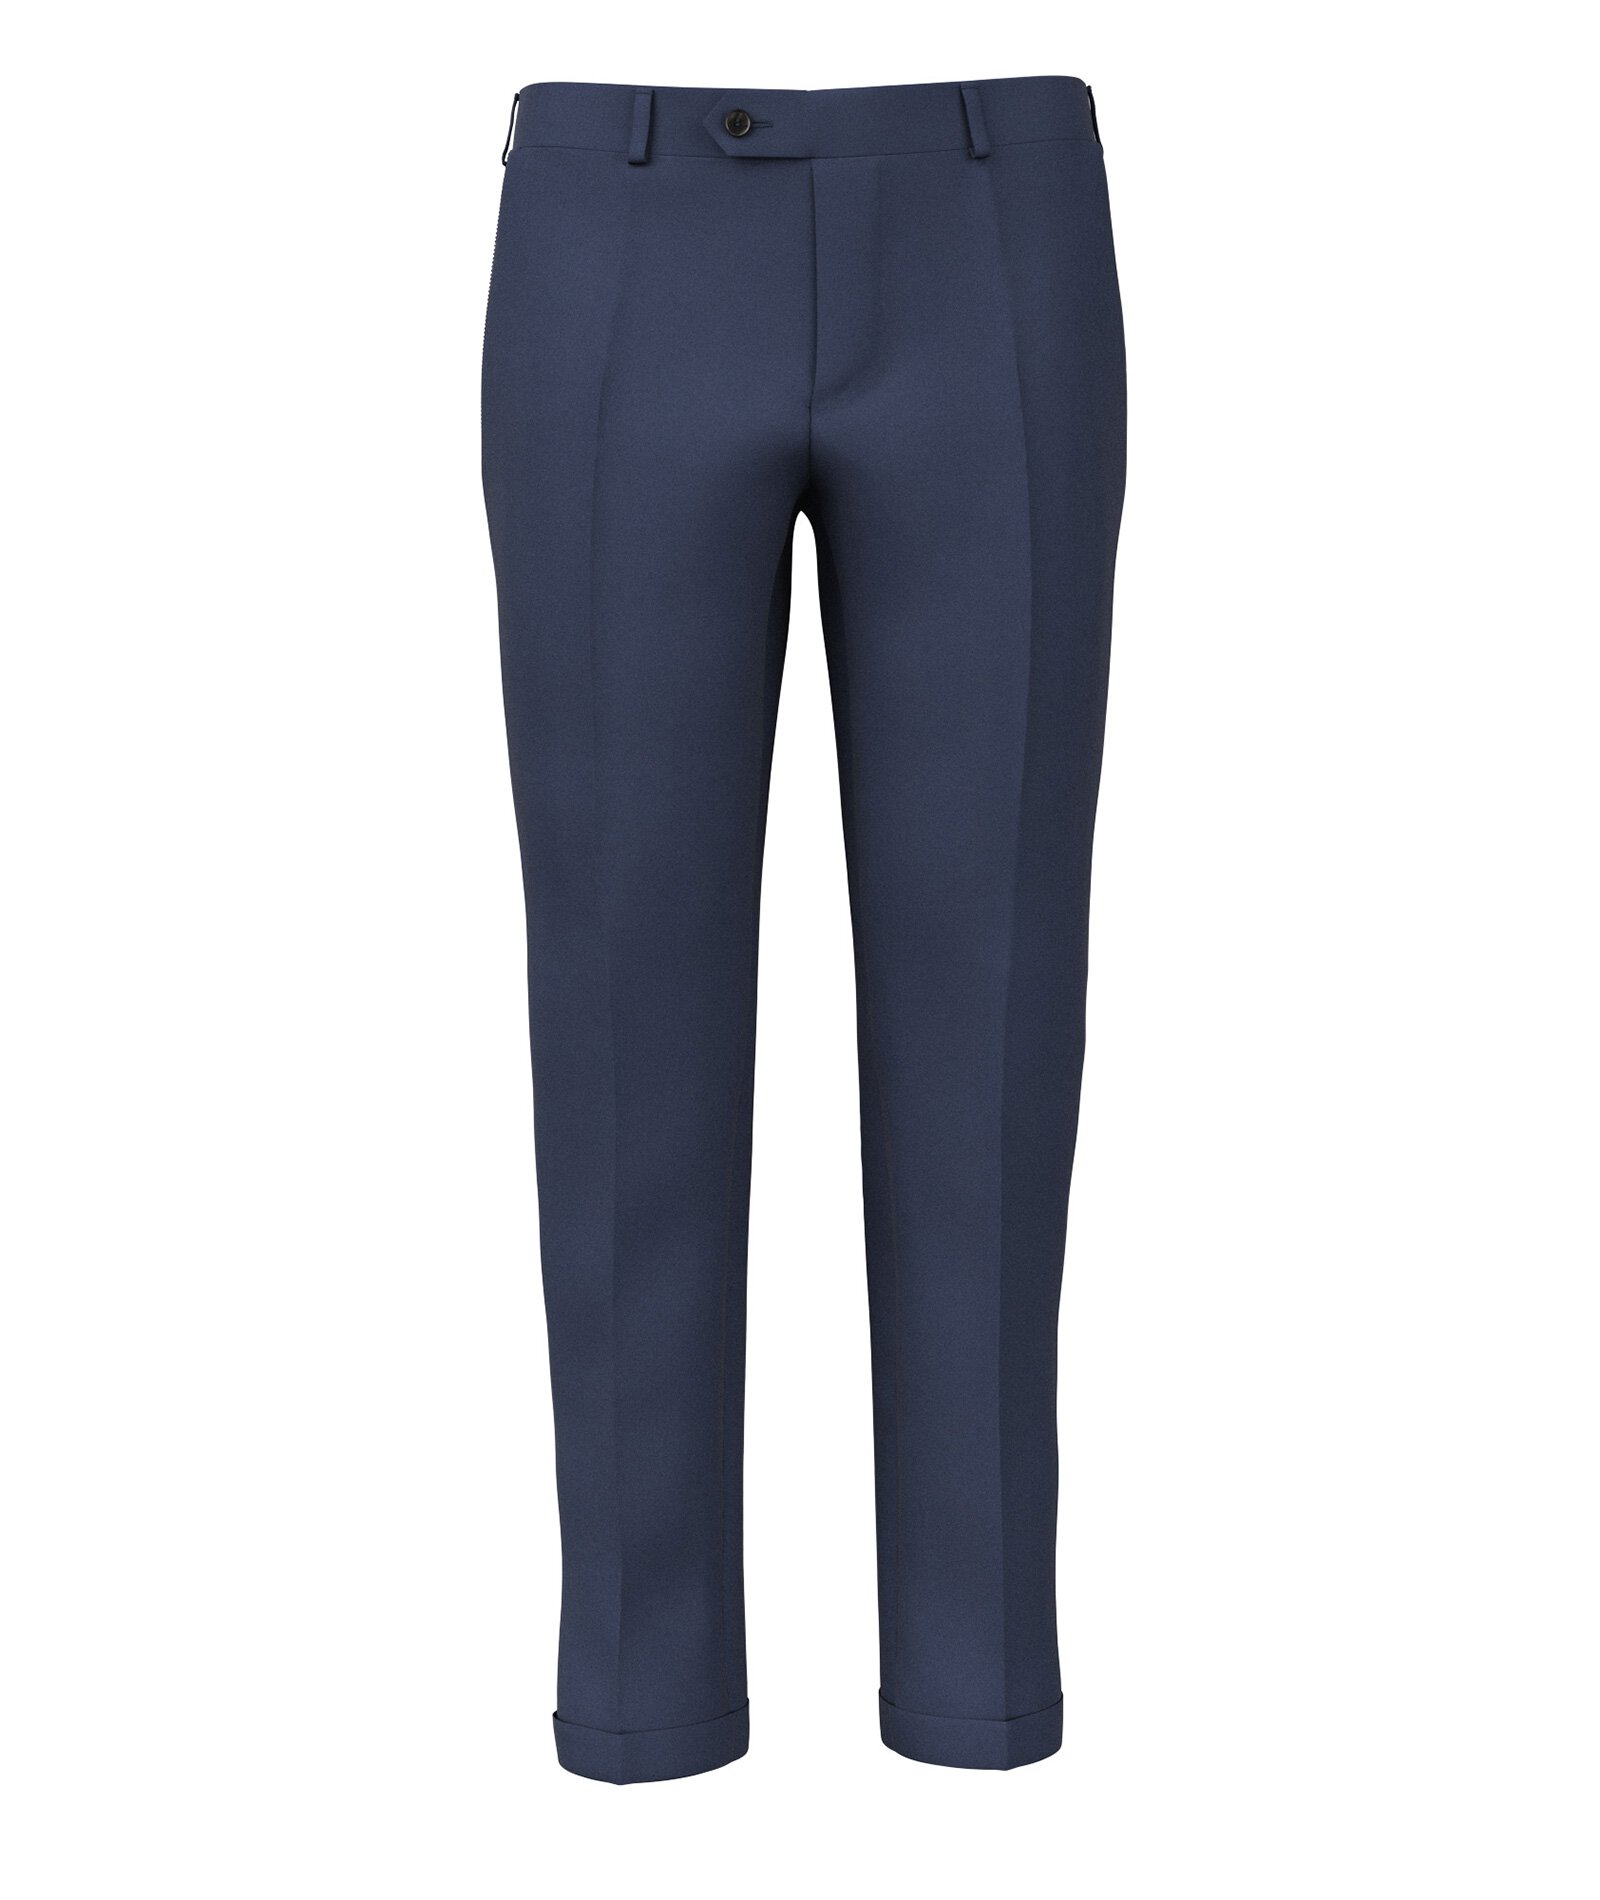 Mens Custom Tailor Made Khaki Dress Pants Business Work Formal Bespoke  Trousers | eBay